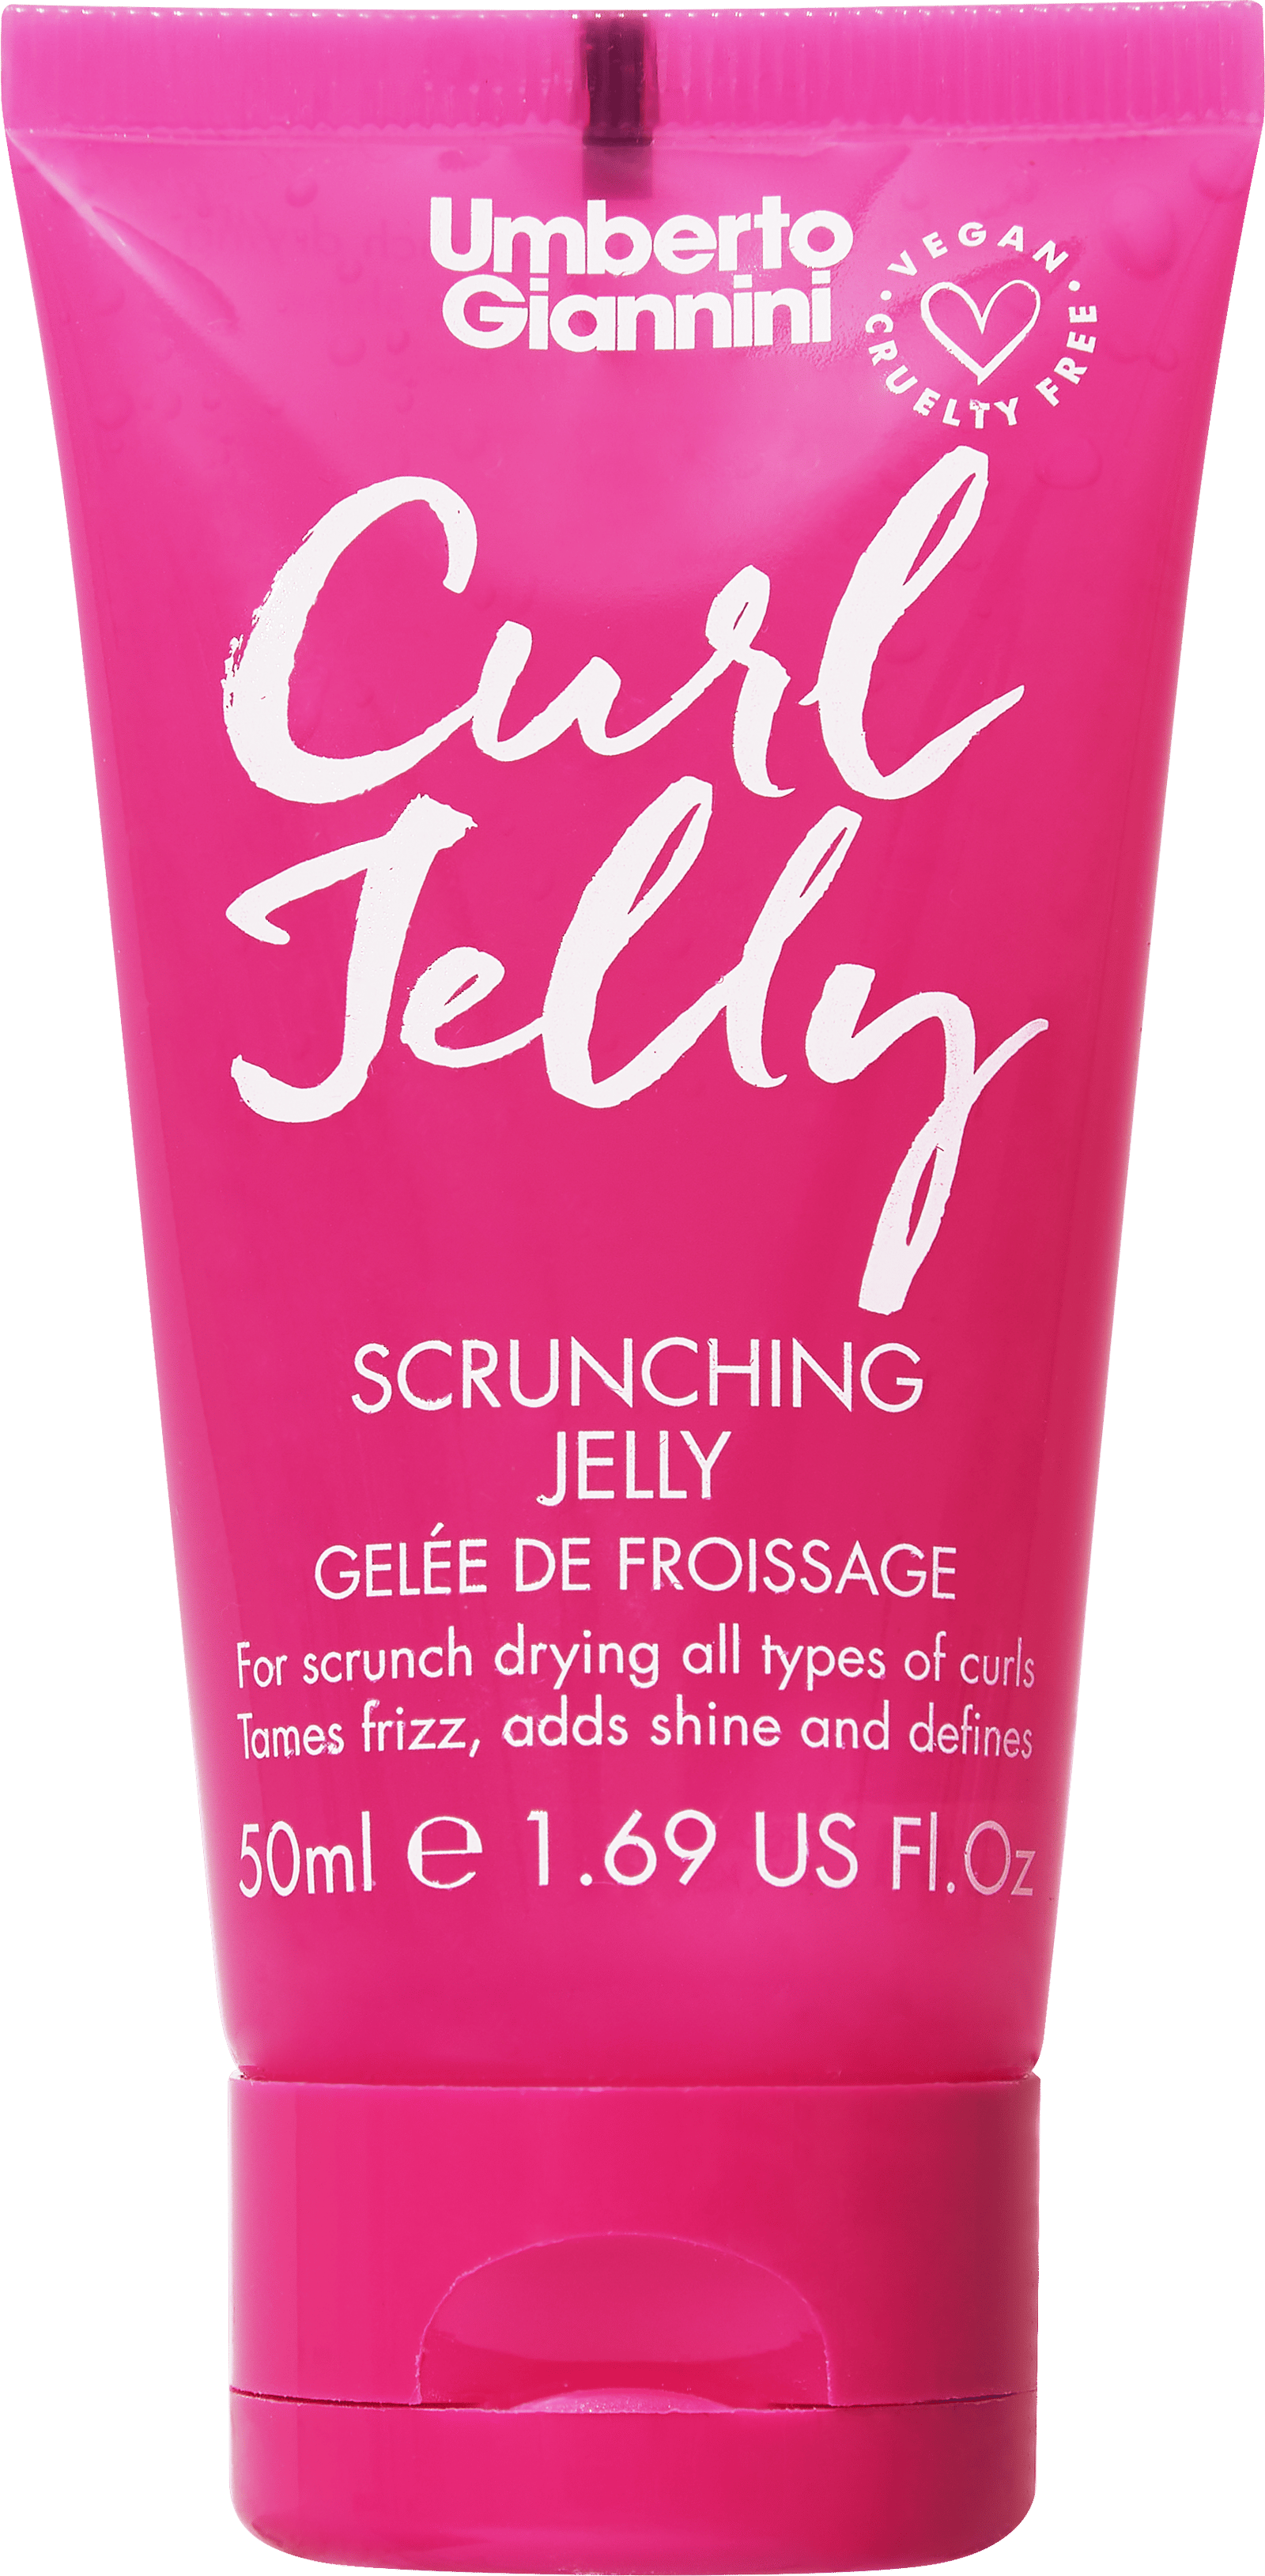 Umberto Giannini Curl Jelly Scrunching Jelly 50ml